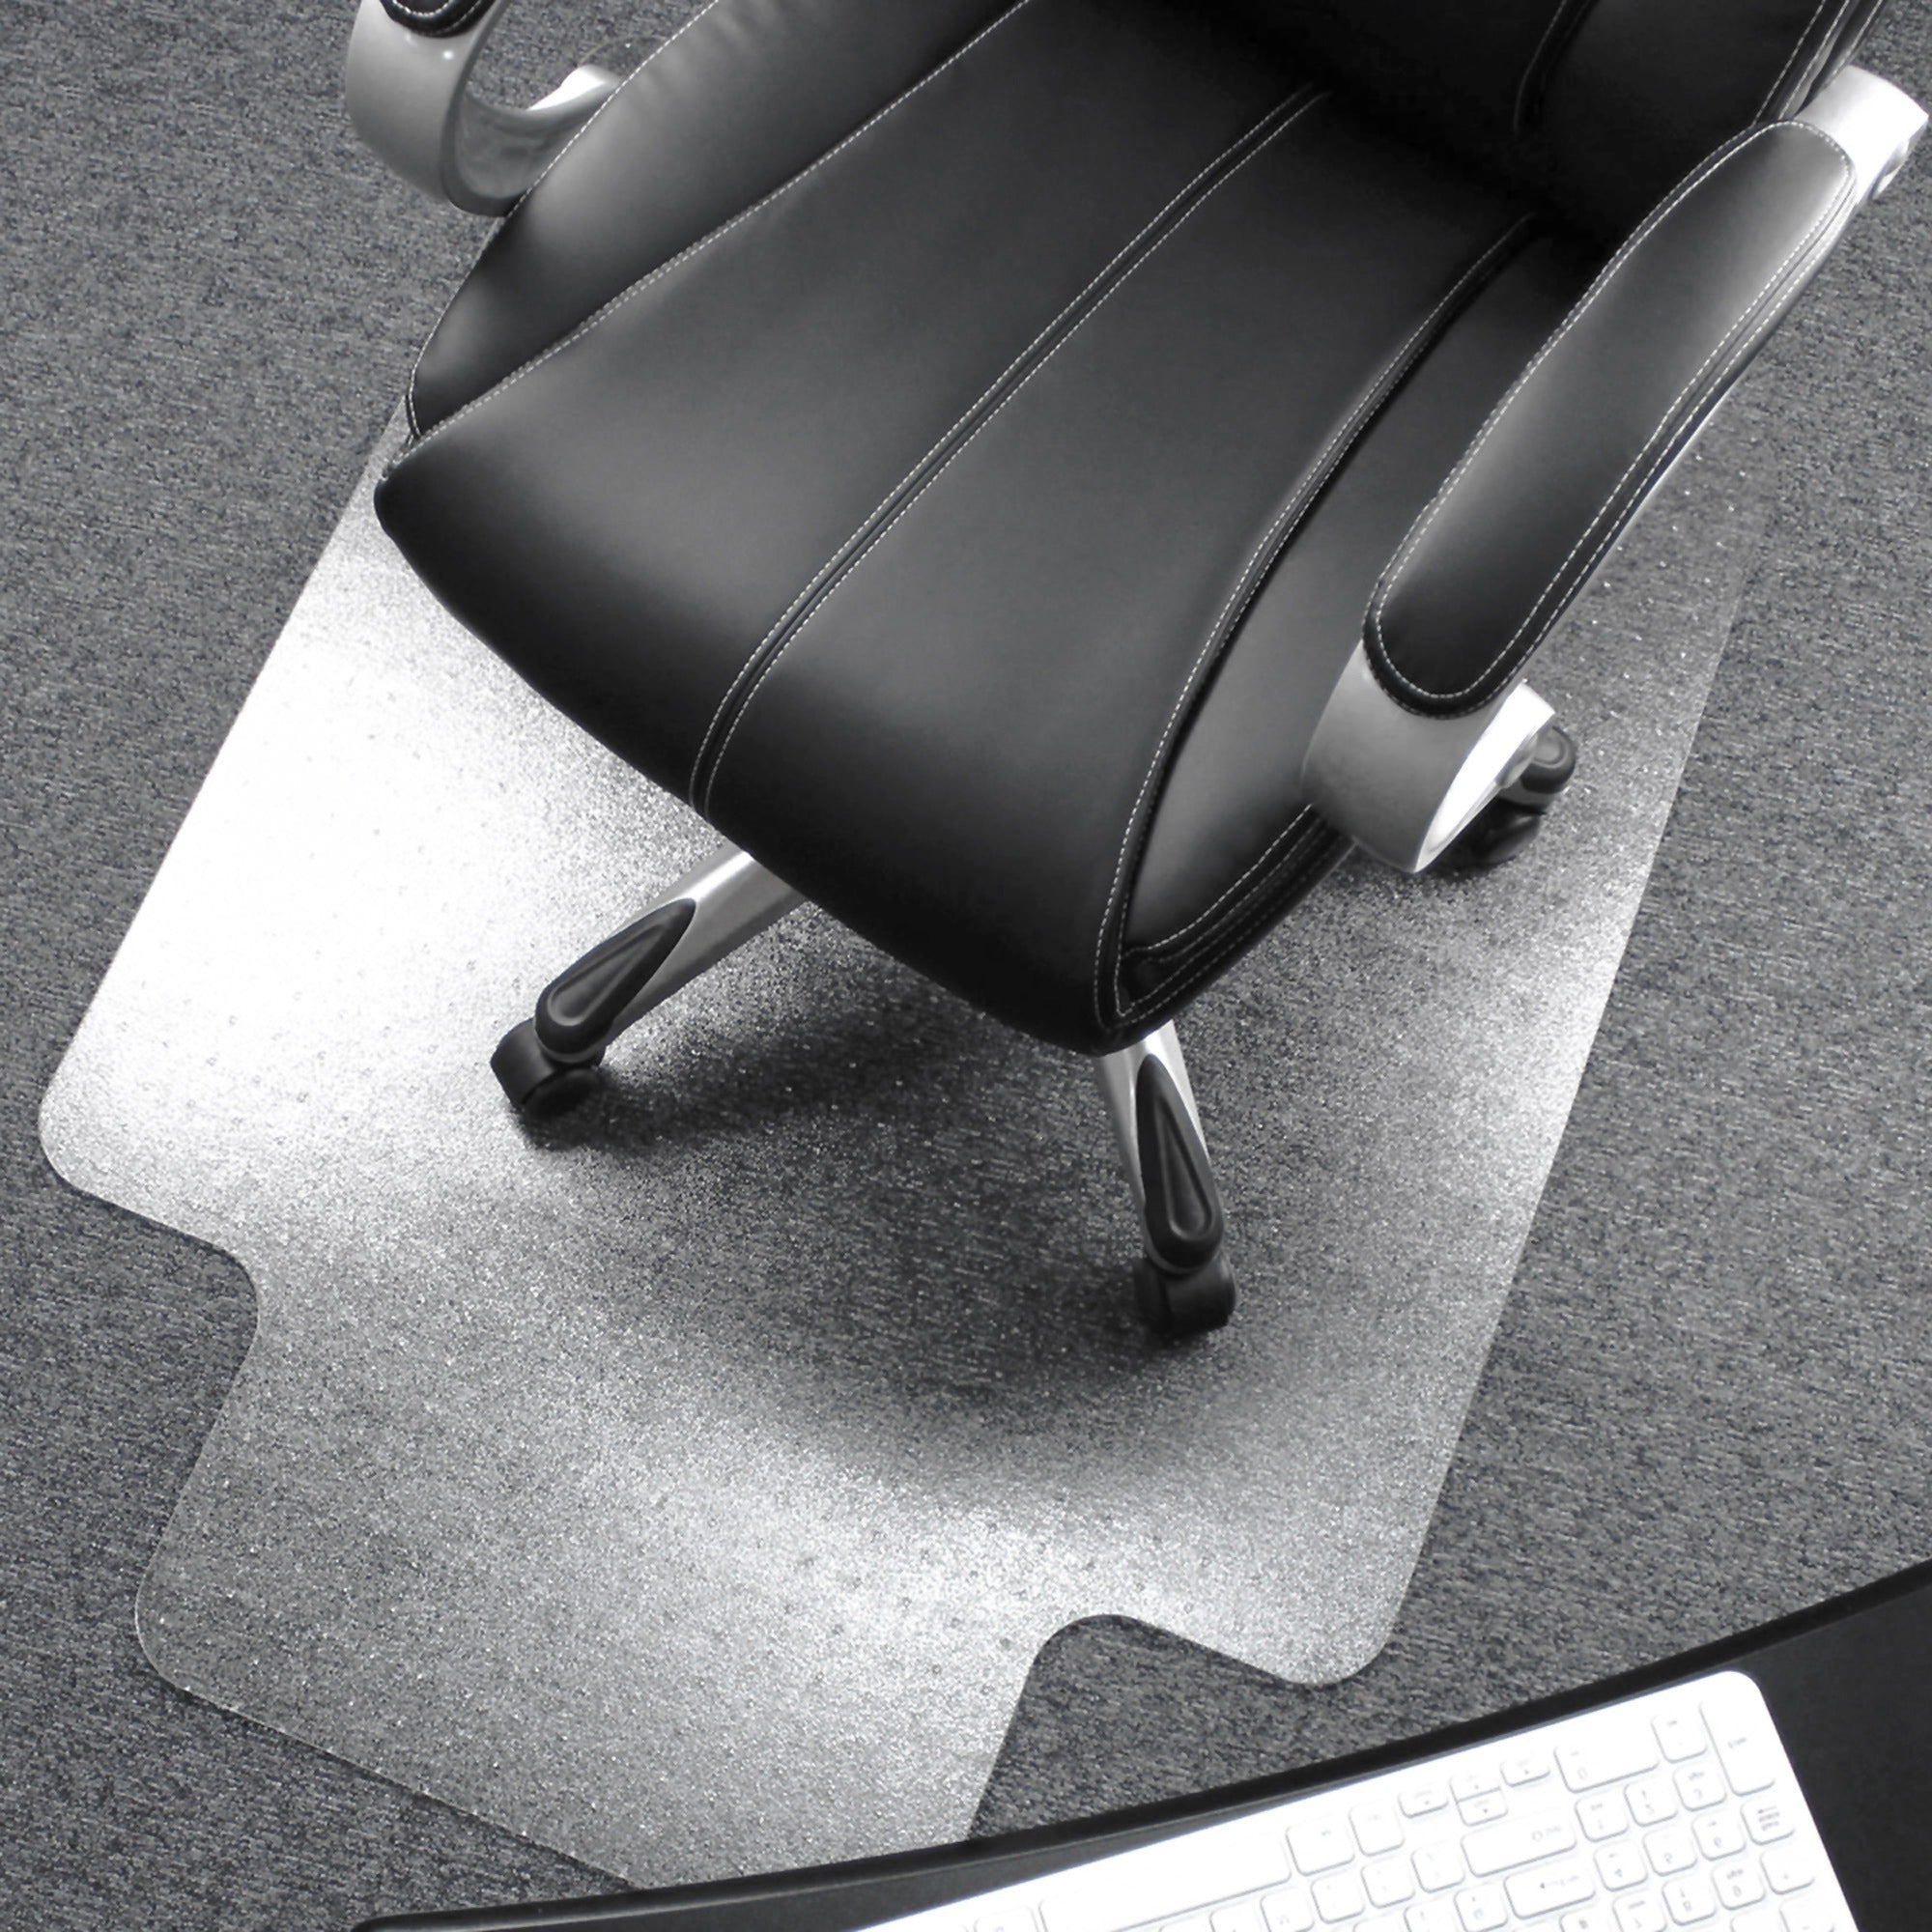 Ultimat Polycarbonate Lipped Chair Mat for Carpets over 1/2" - 48" x 53" - Clear Lipped Polycarbonate Chair Mat For Carpets - 53" L x 48" W x 0.11" D - 